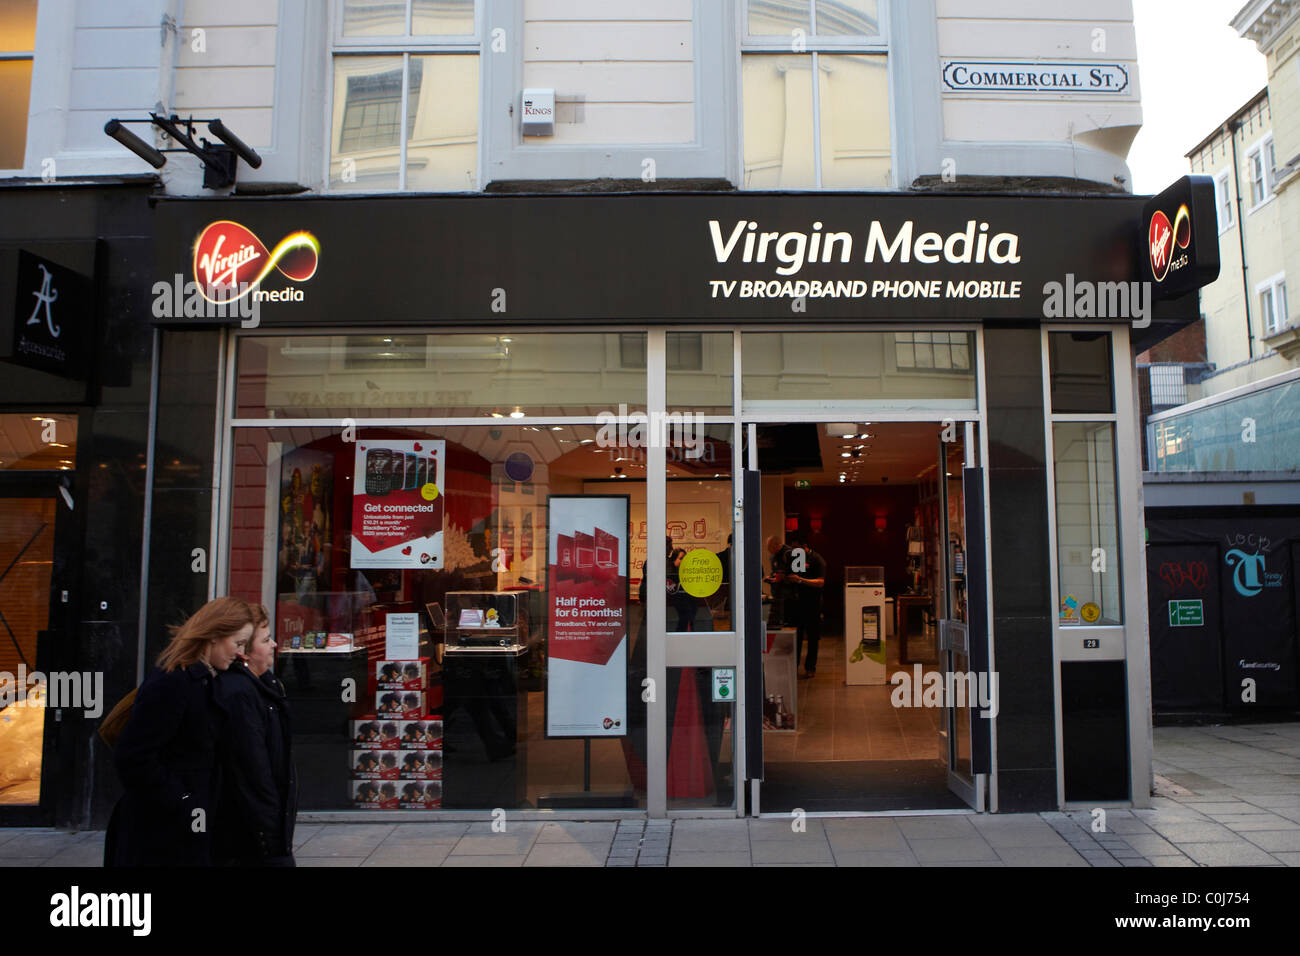 Virgin Media TV Broadband Phone Mobile shop in Leeds Stock Photo - Alamy